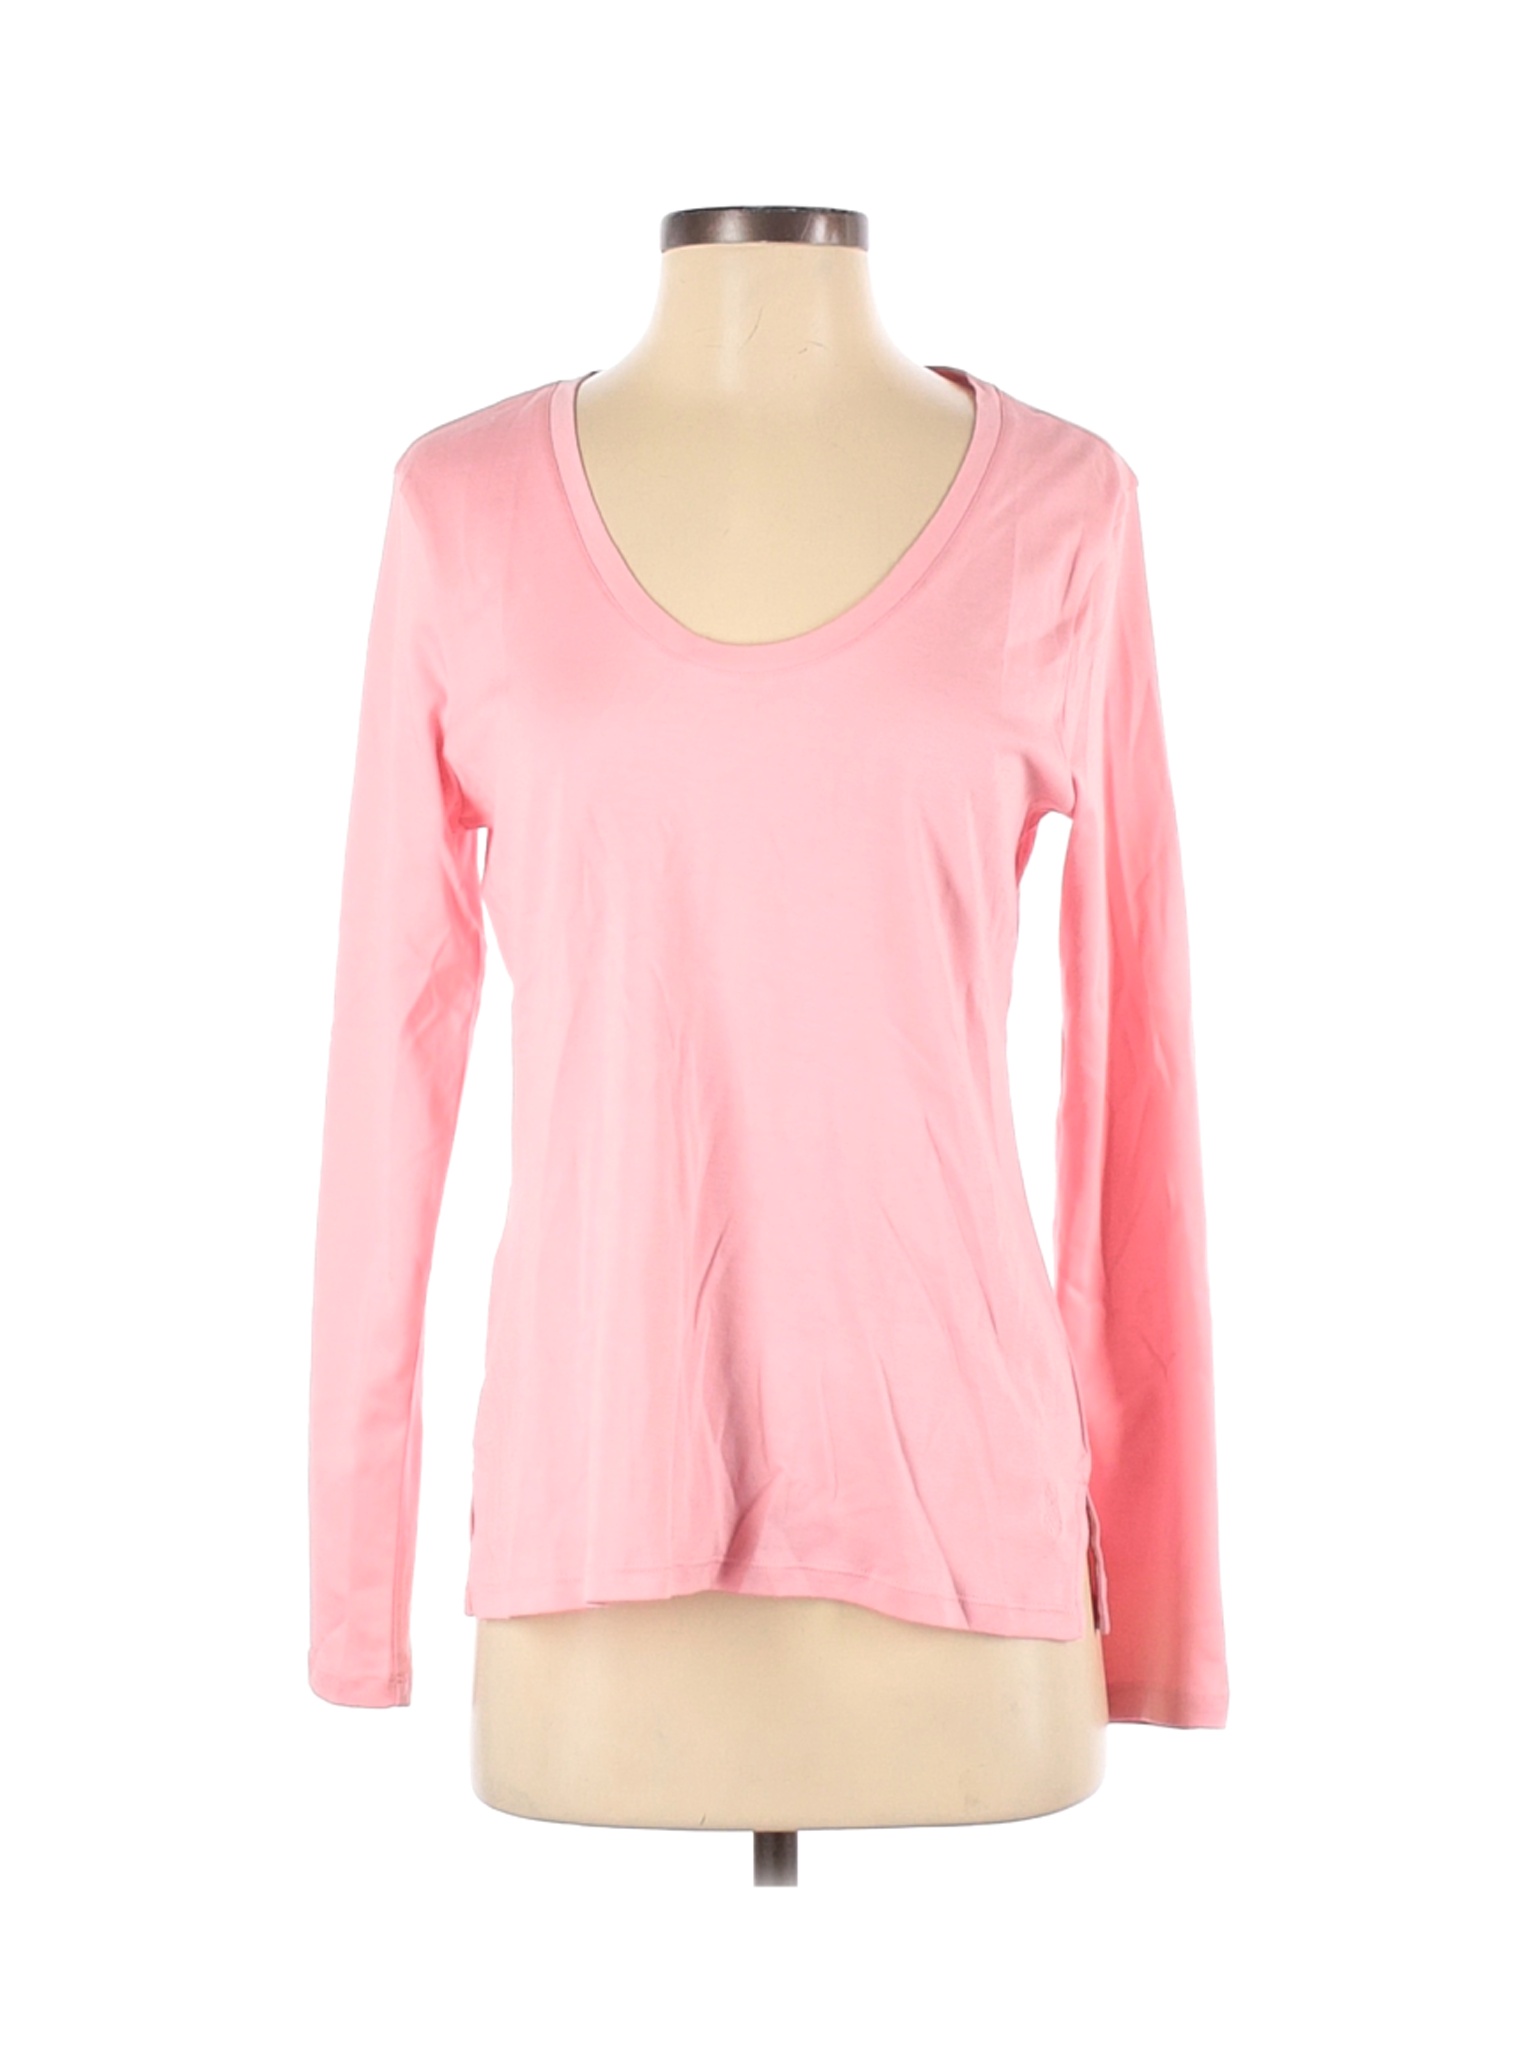 Tommy Bahama Women Pink Long Sleeve T-Shirt S Petites | eBay